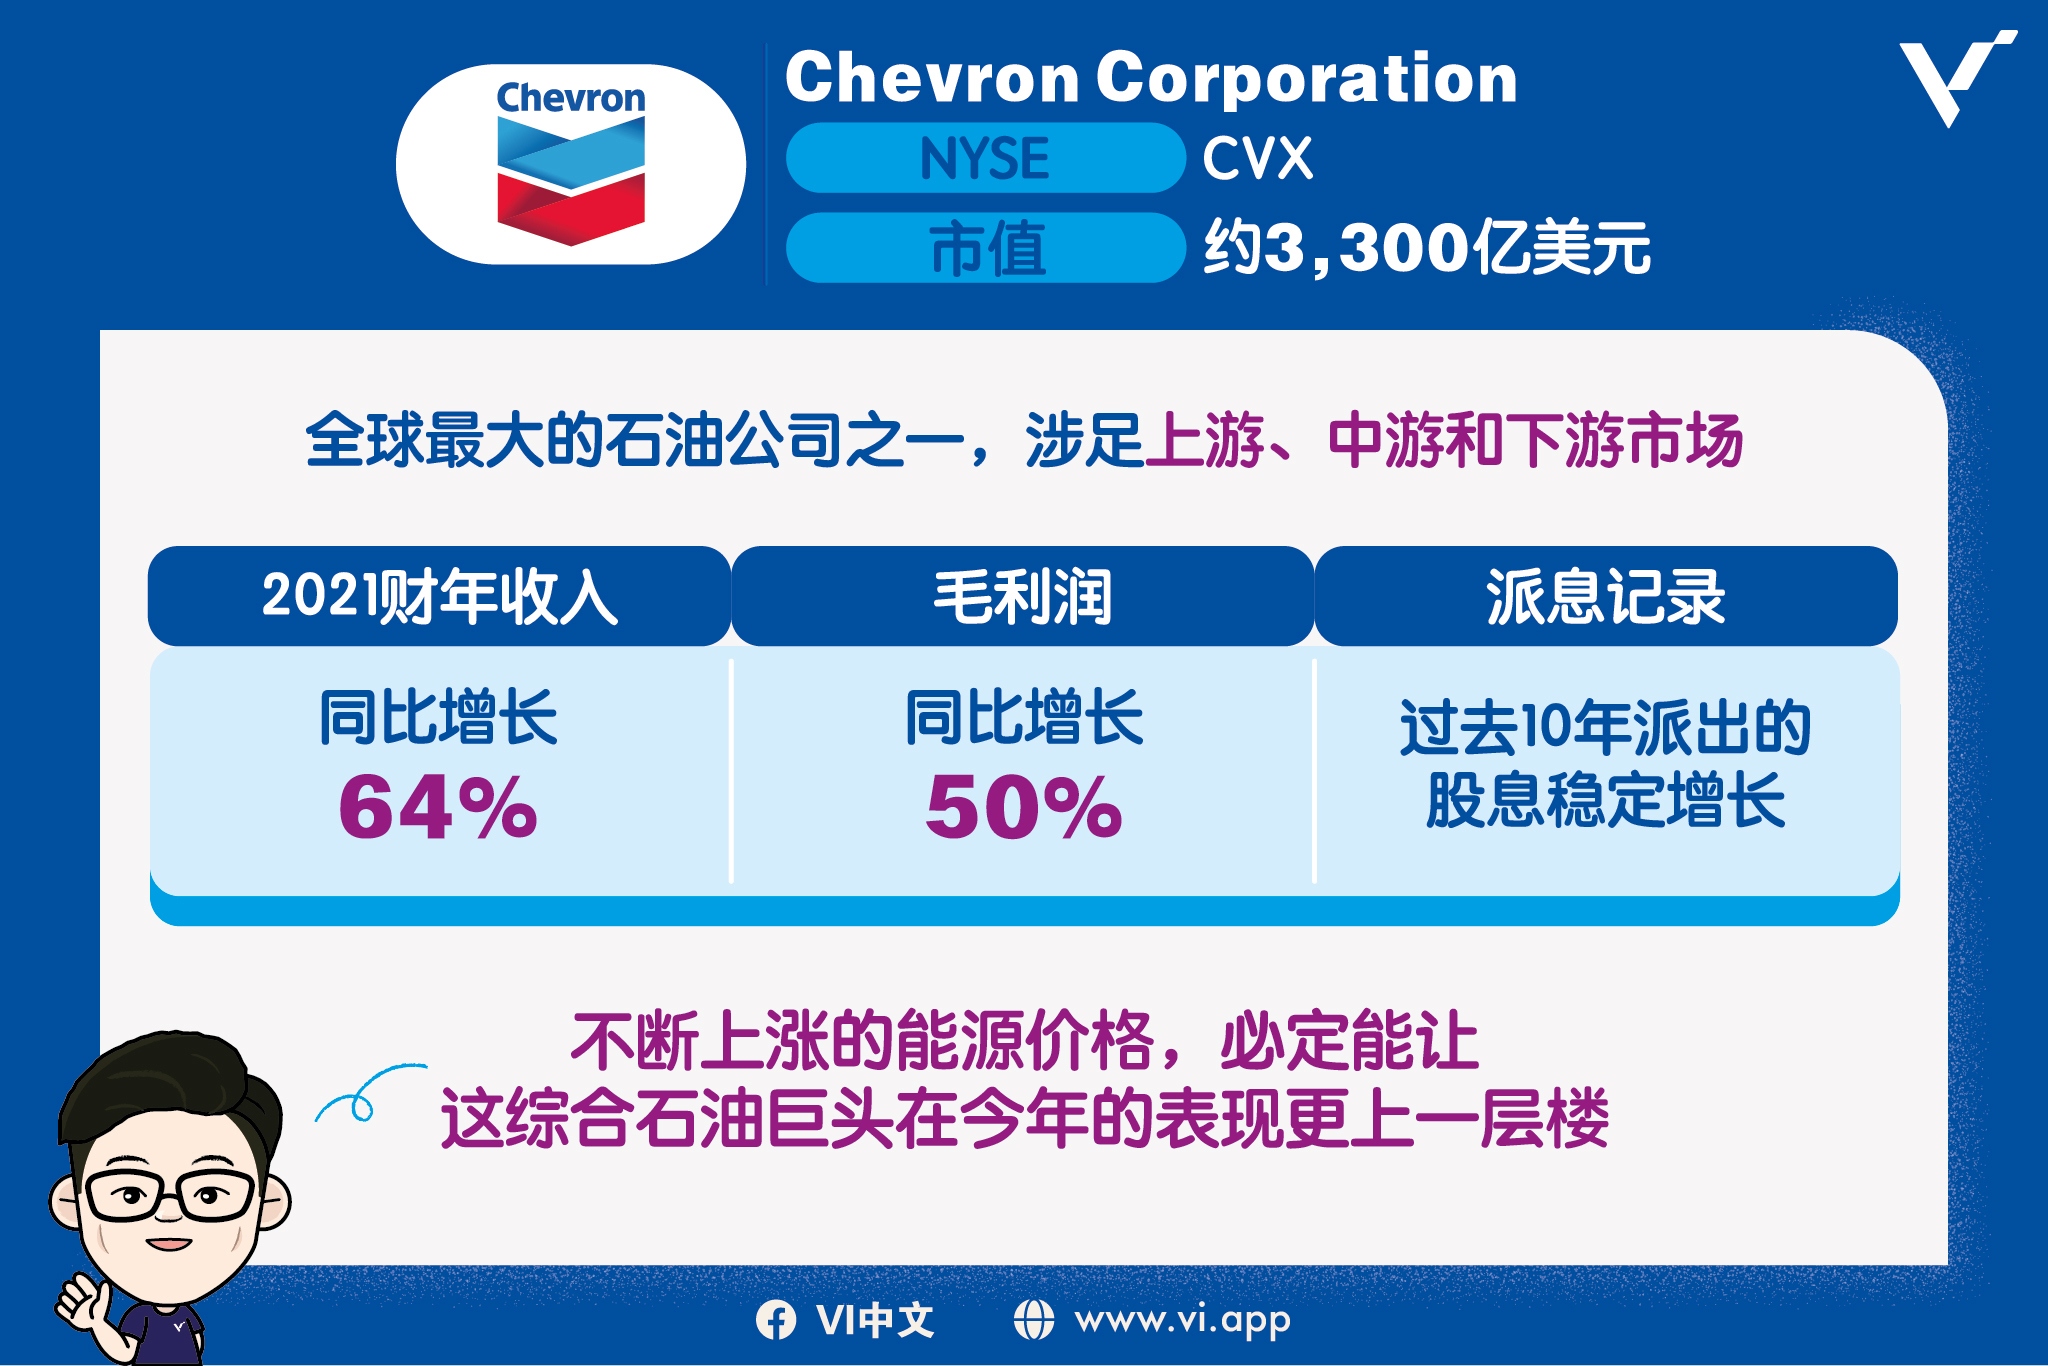 公司1：Chevron Corporation (NYSE: CVX)